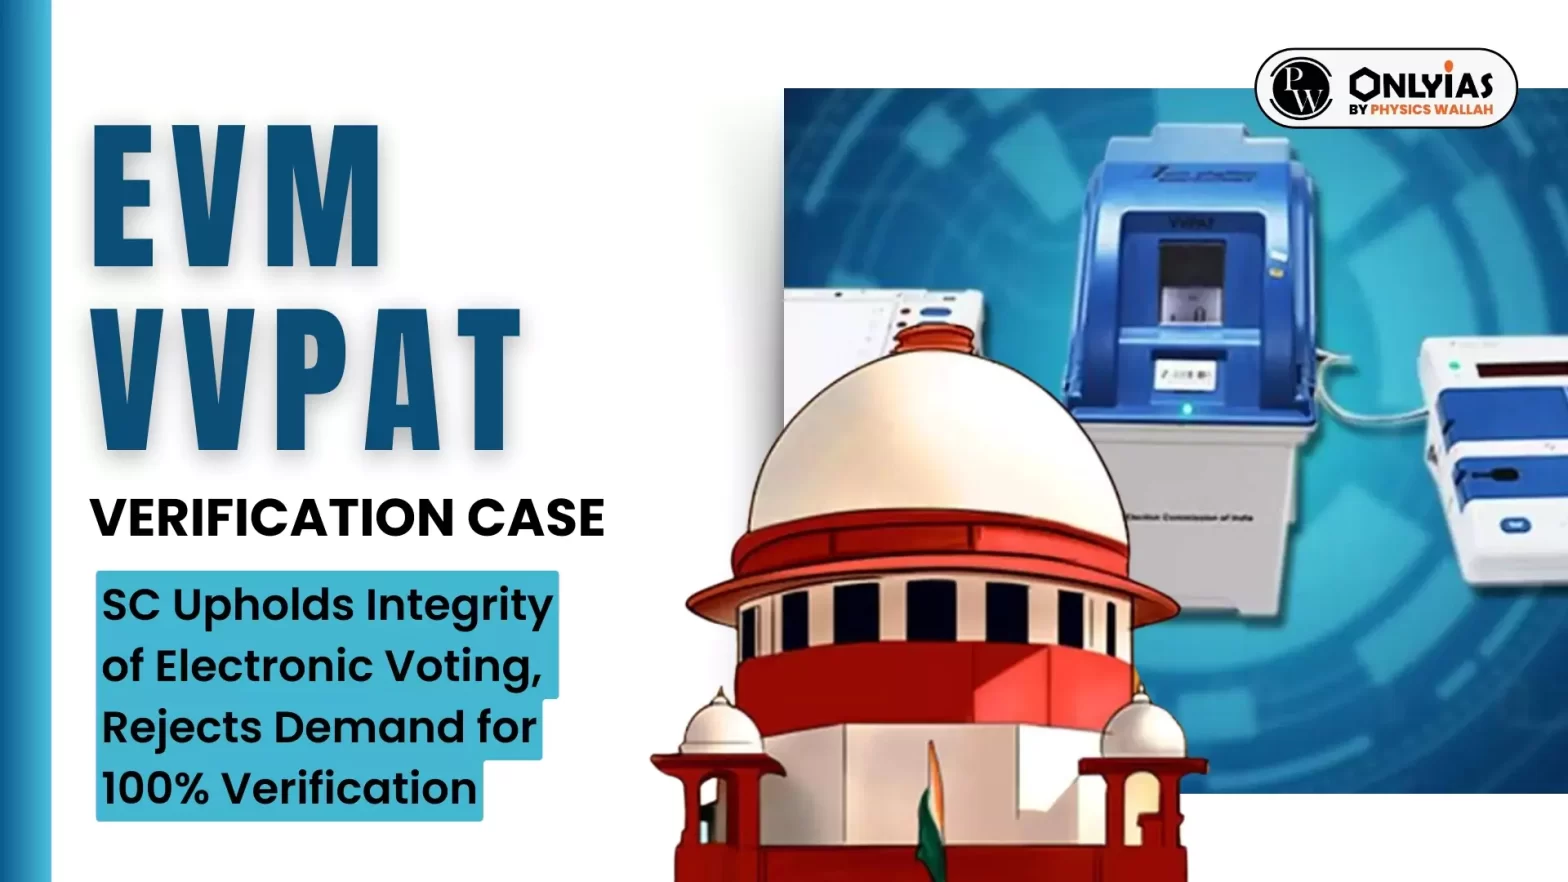 EVM VVPAT Verification Case: SC Upholds Integrity of Electronic Voting, Rejects Demand for 100% Verification